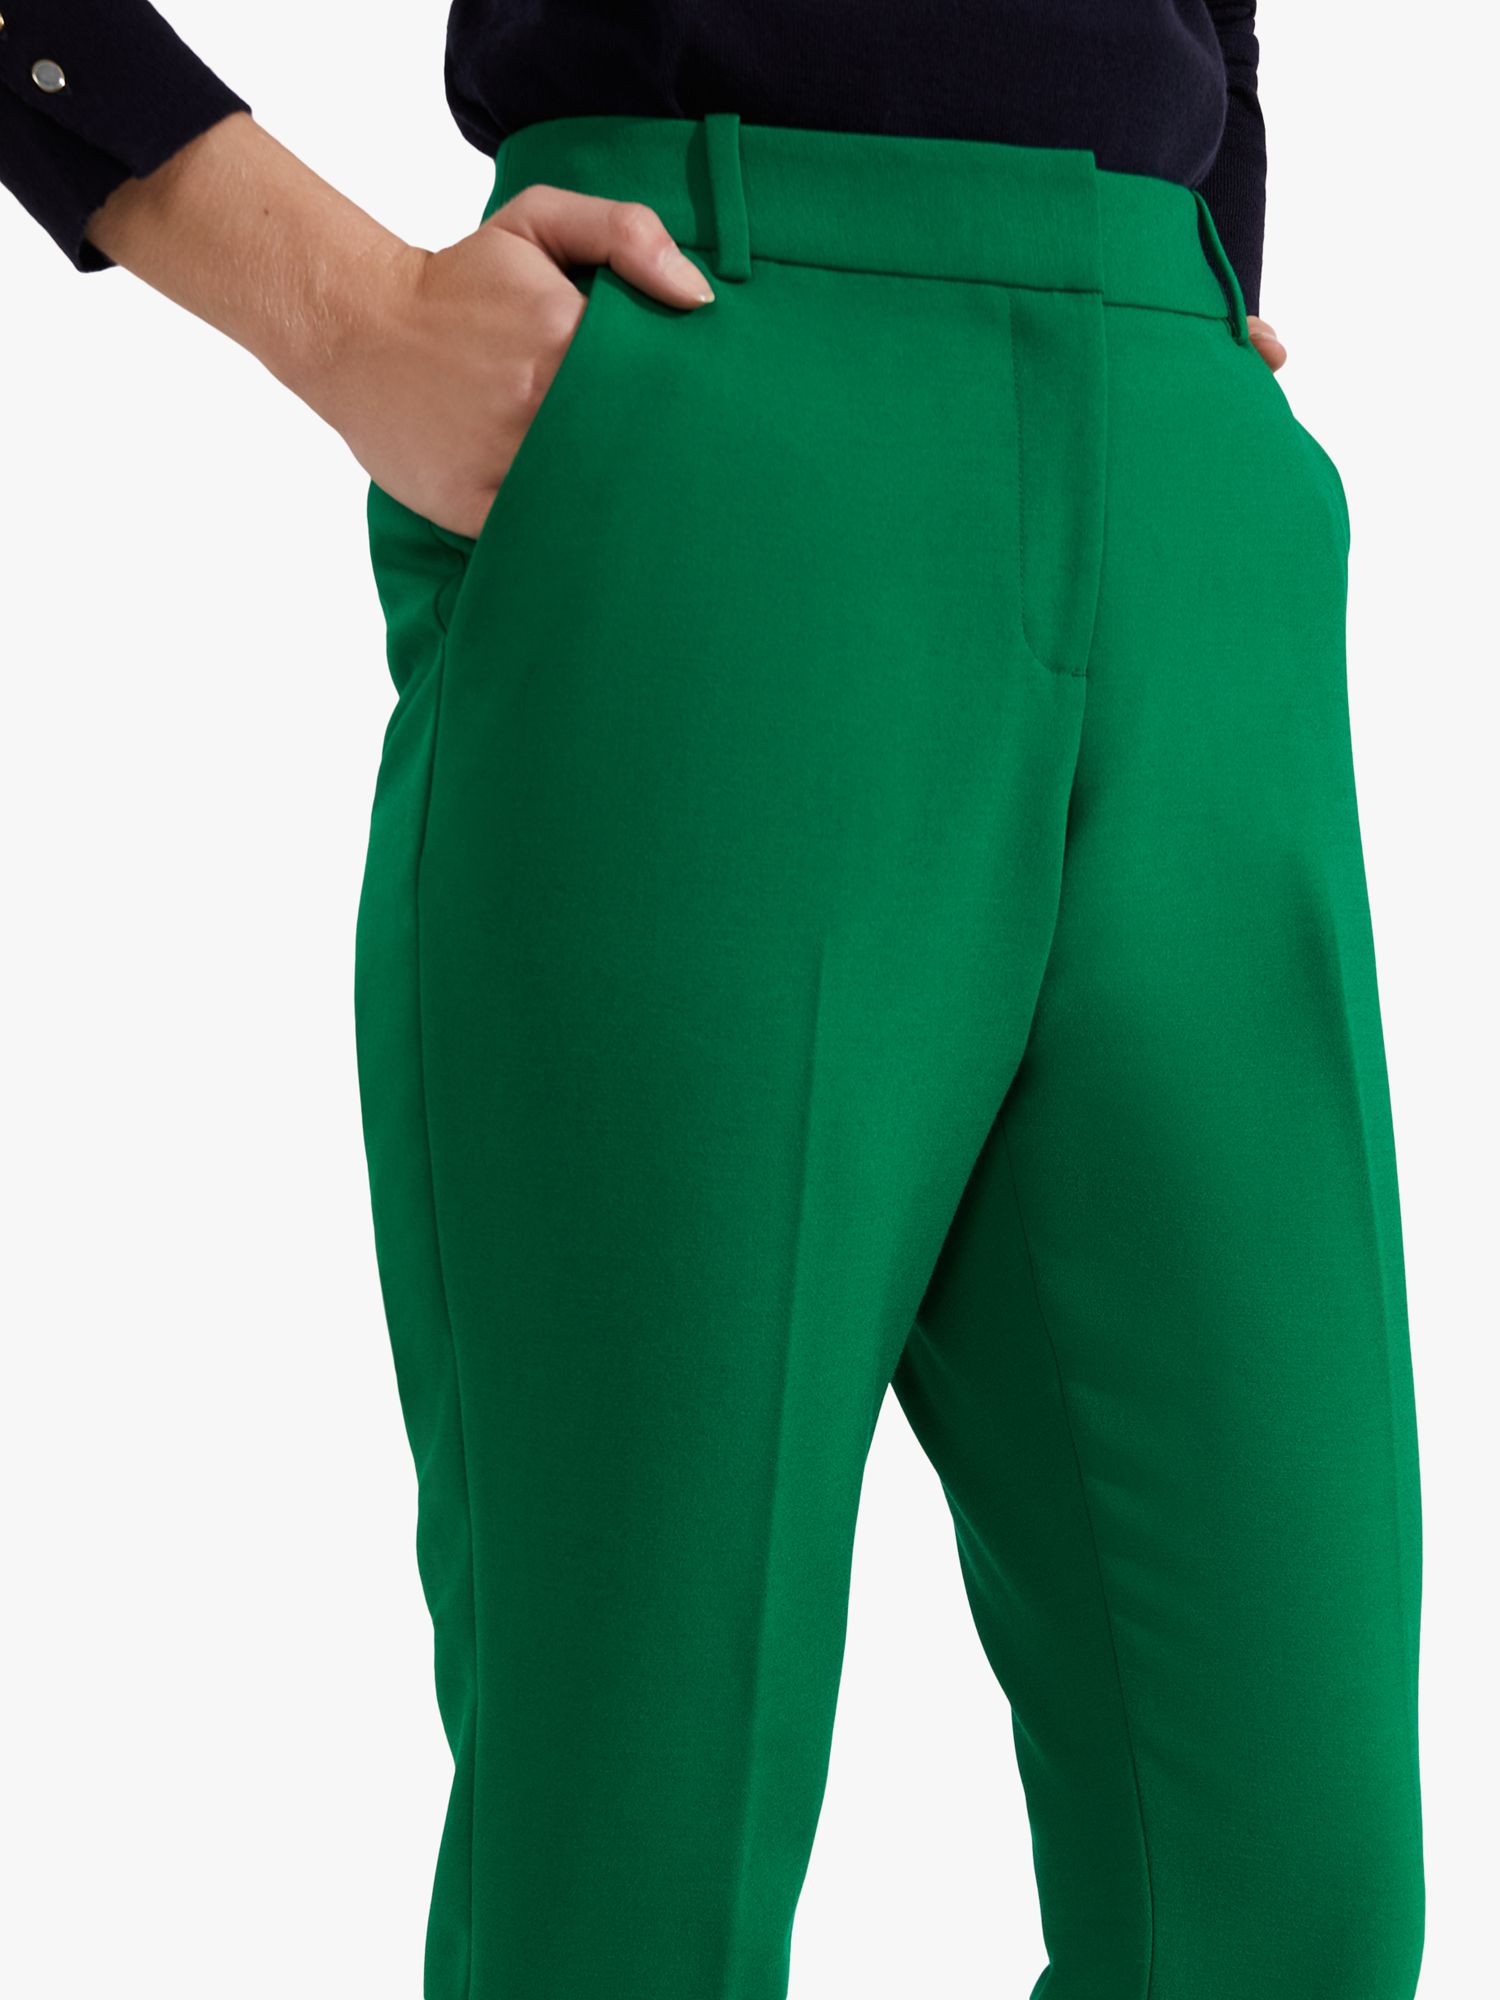 Hobbs Petite Suki Trousers, Malachite Green, 10